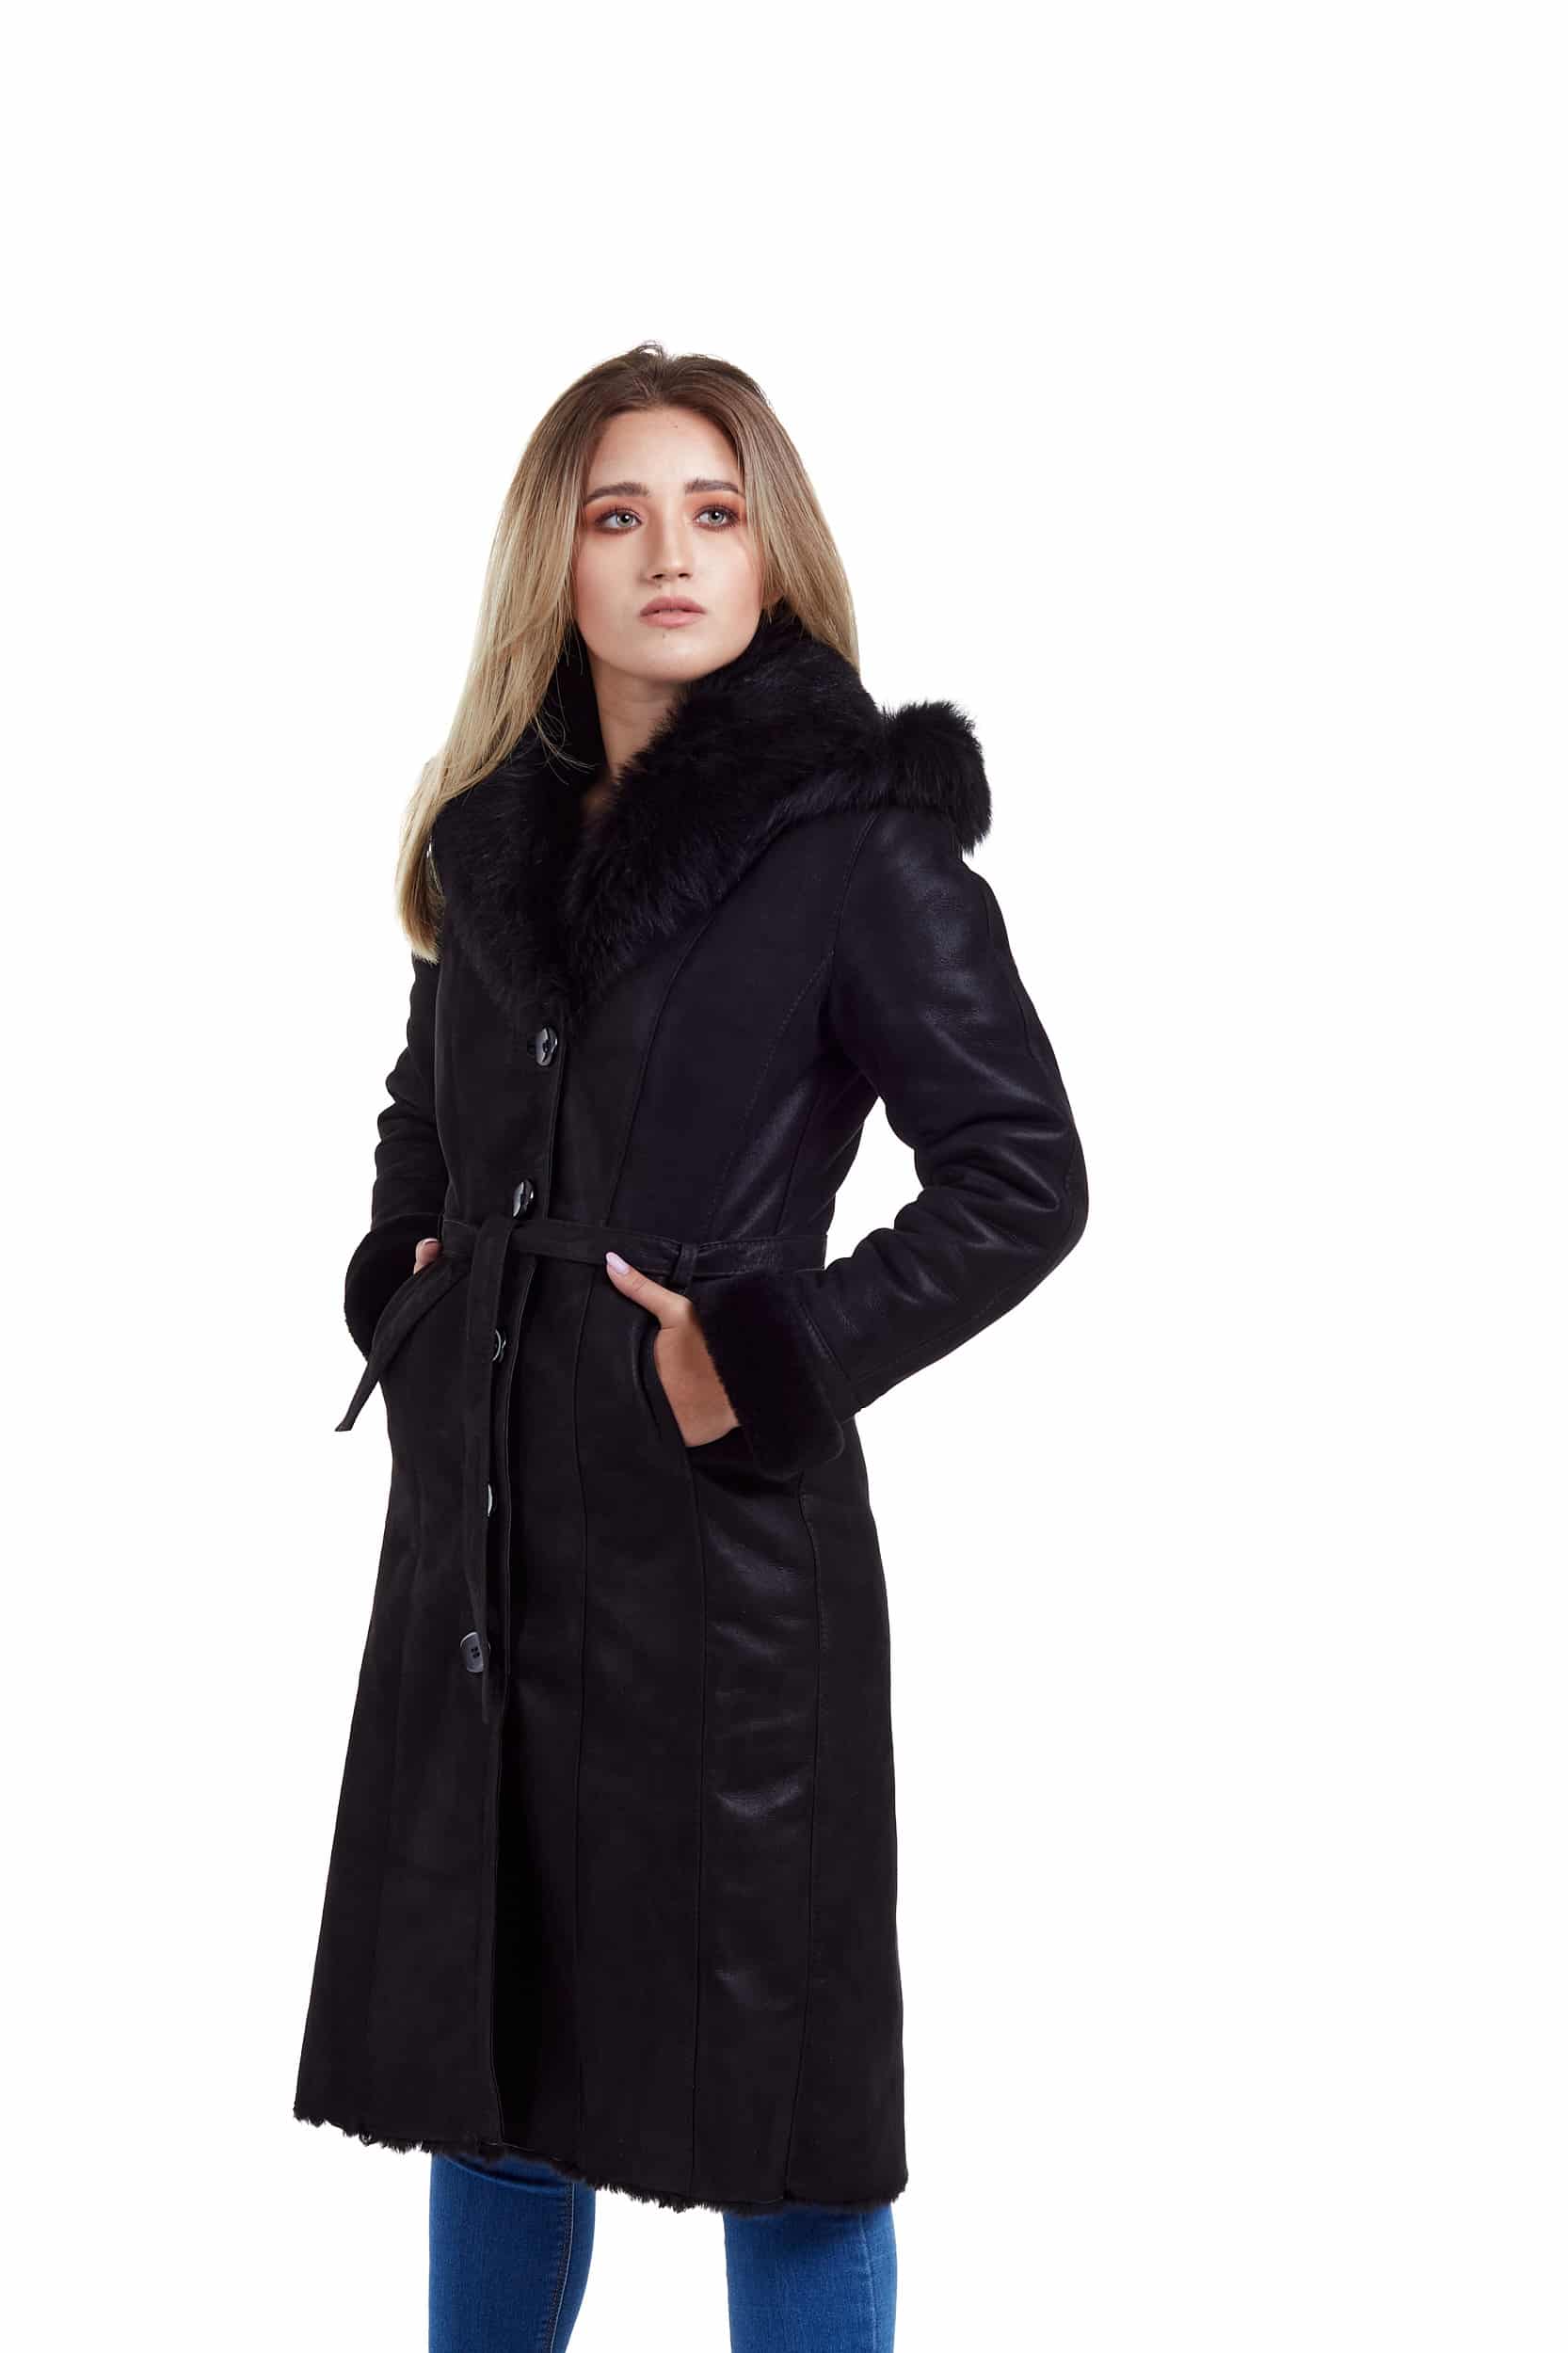 Haina de blana pentru femei negru cod 20 , haina de blana lunga